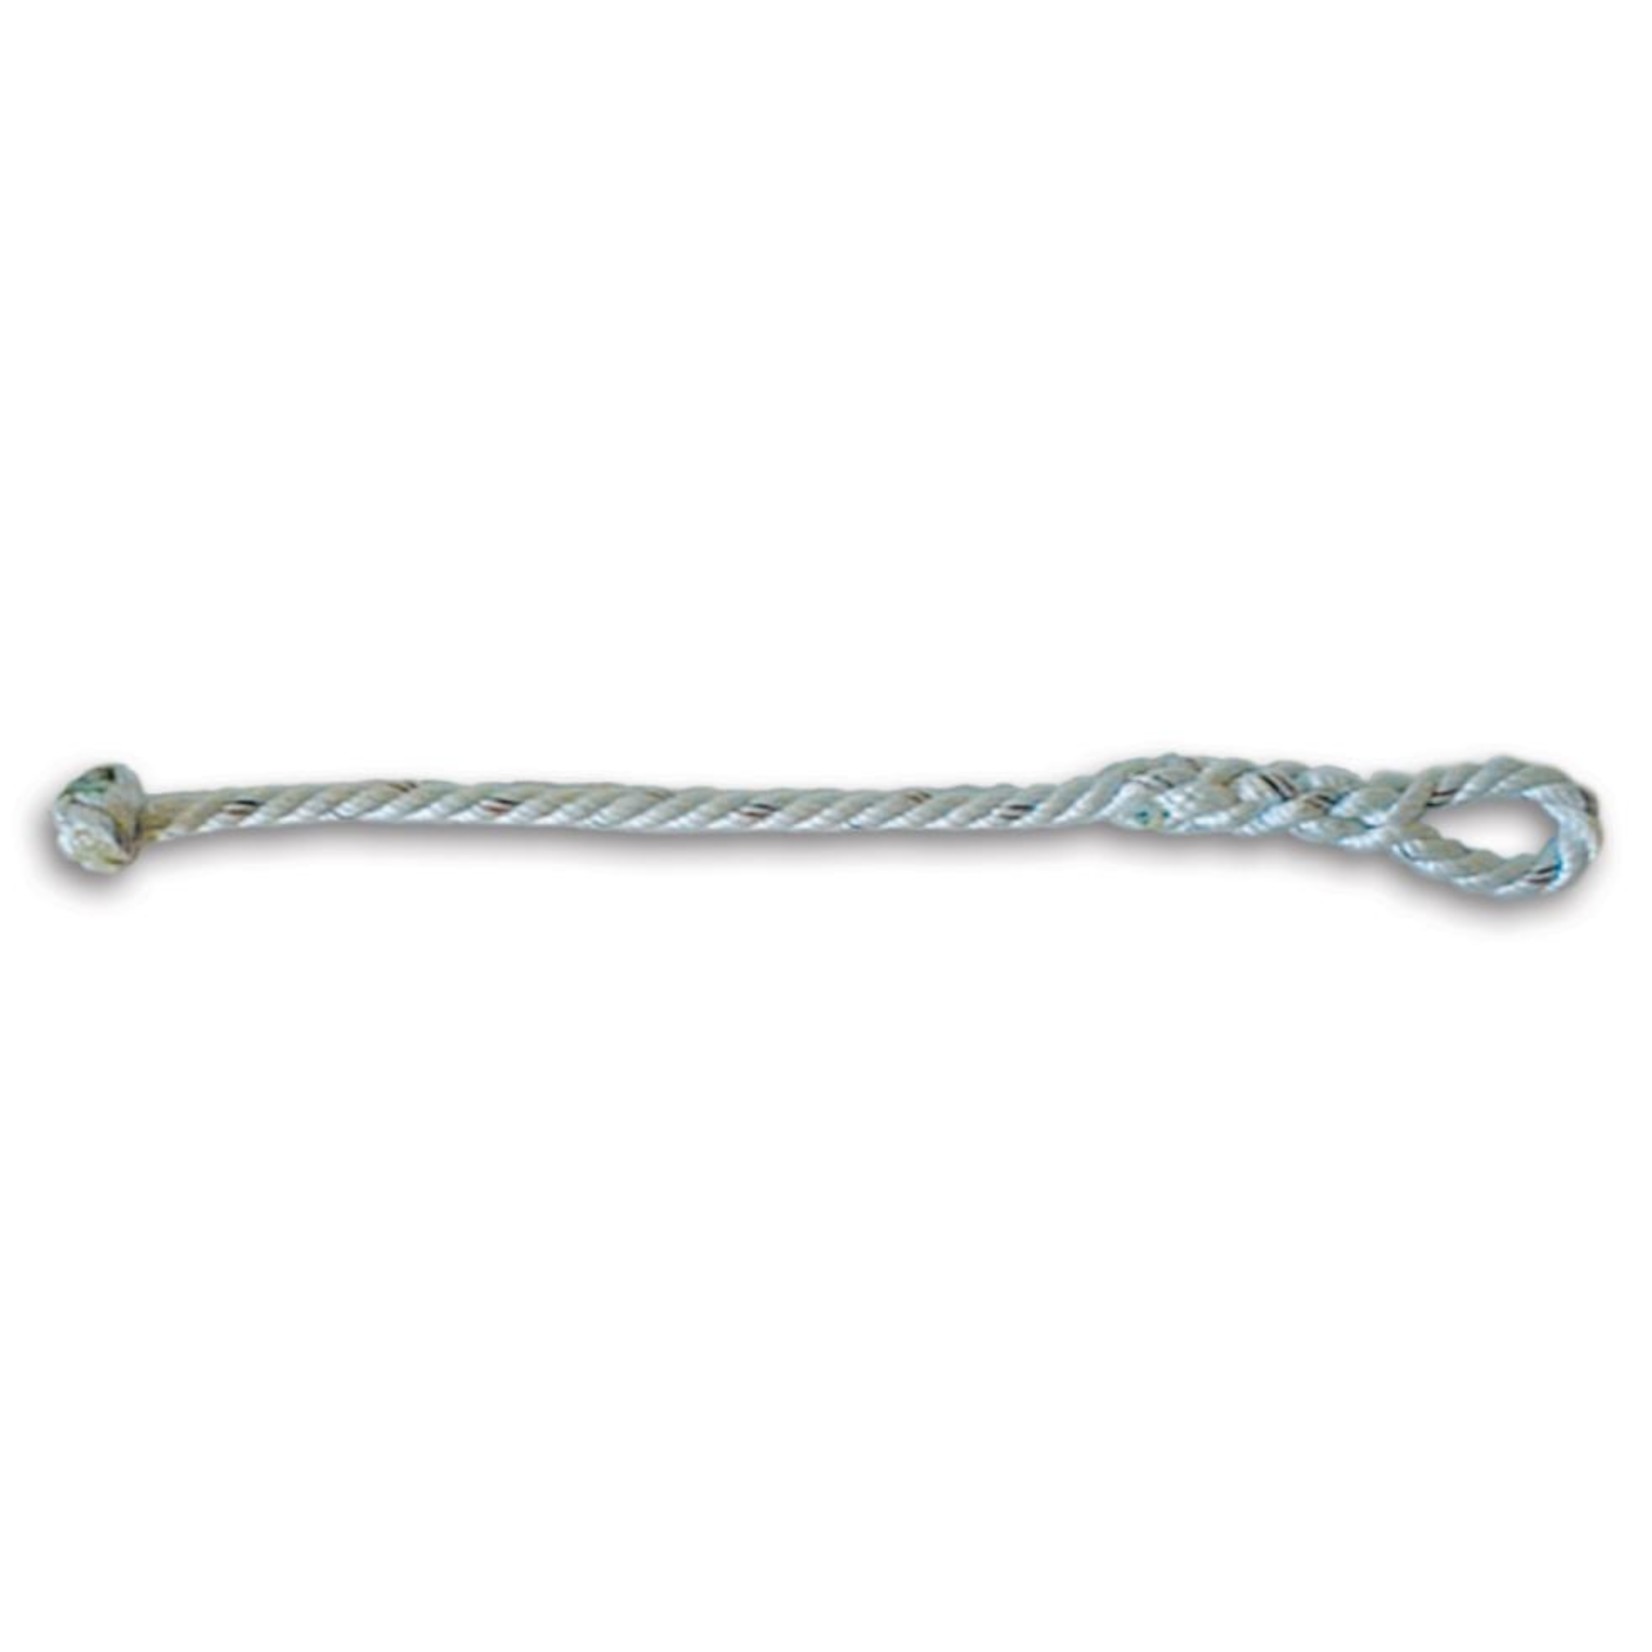 U-Rope Haedsail knot 8mm